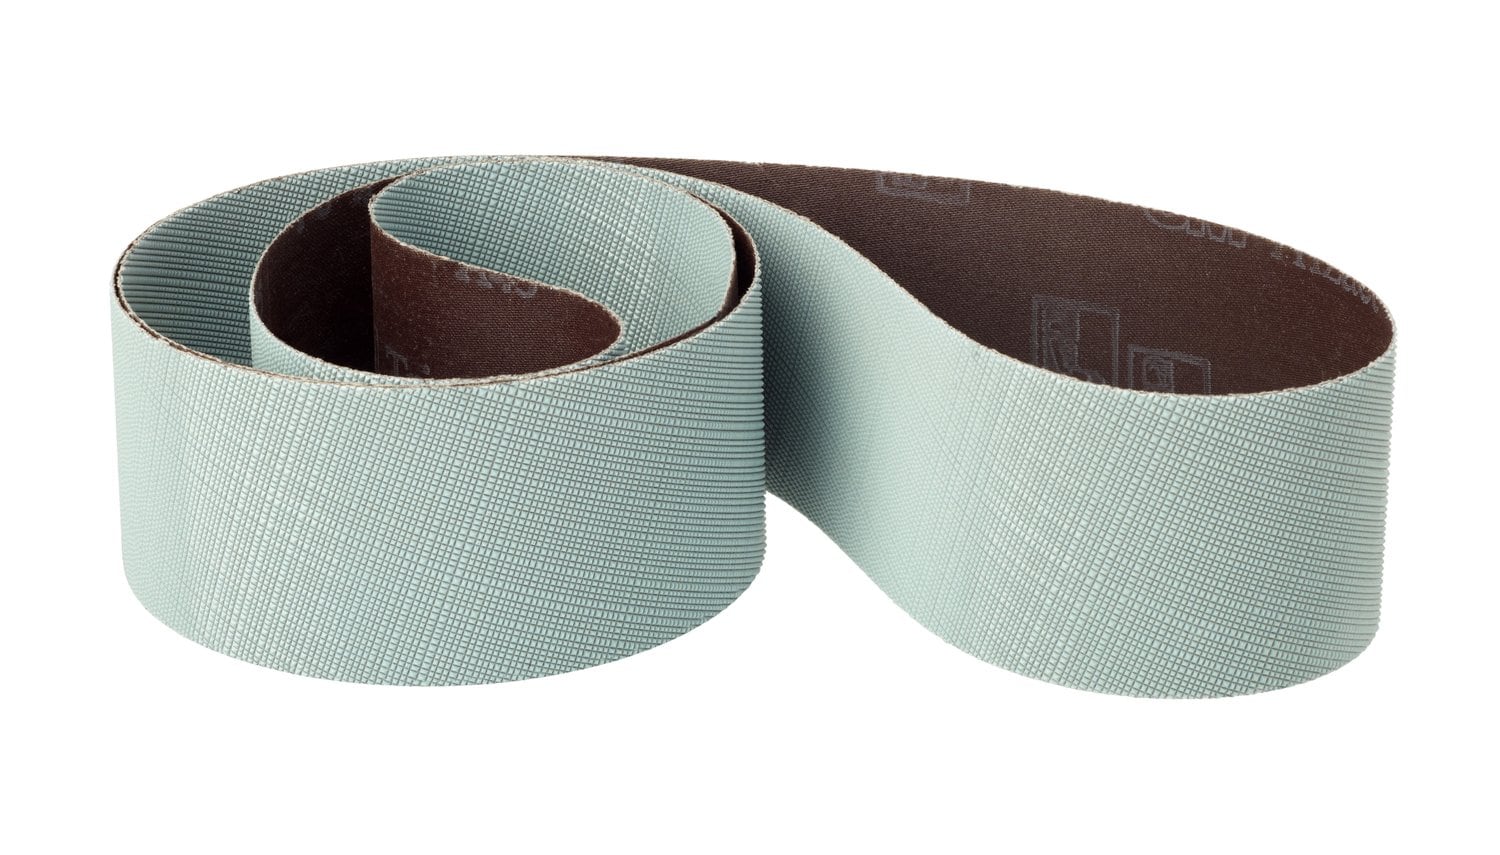 7010515894 - 3M Trizact Cloth Belt 953FA, A16 XF-weight, 2 in x 106 in, Film-lok,
No Flex